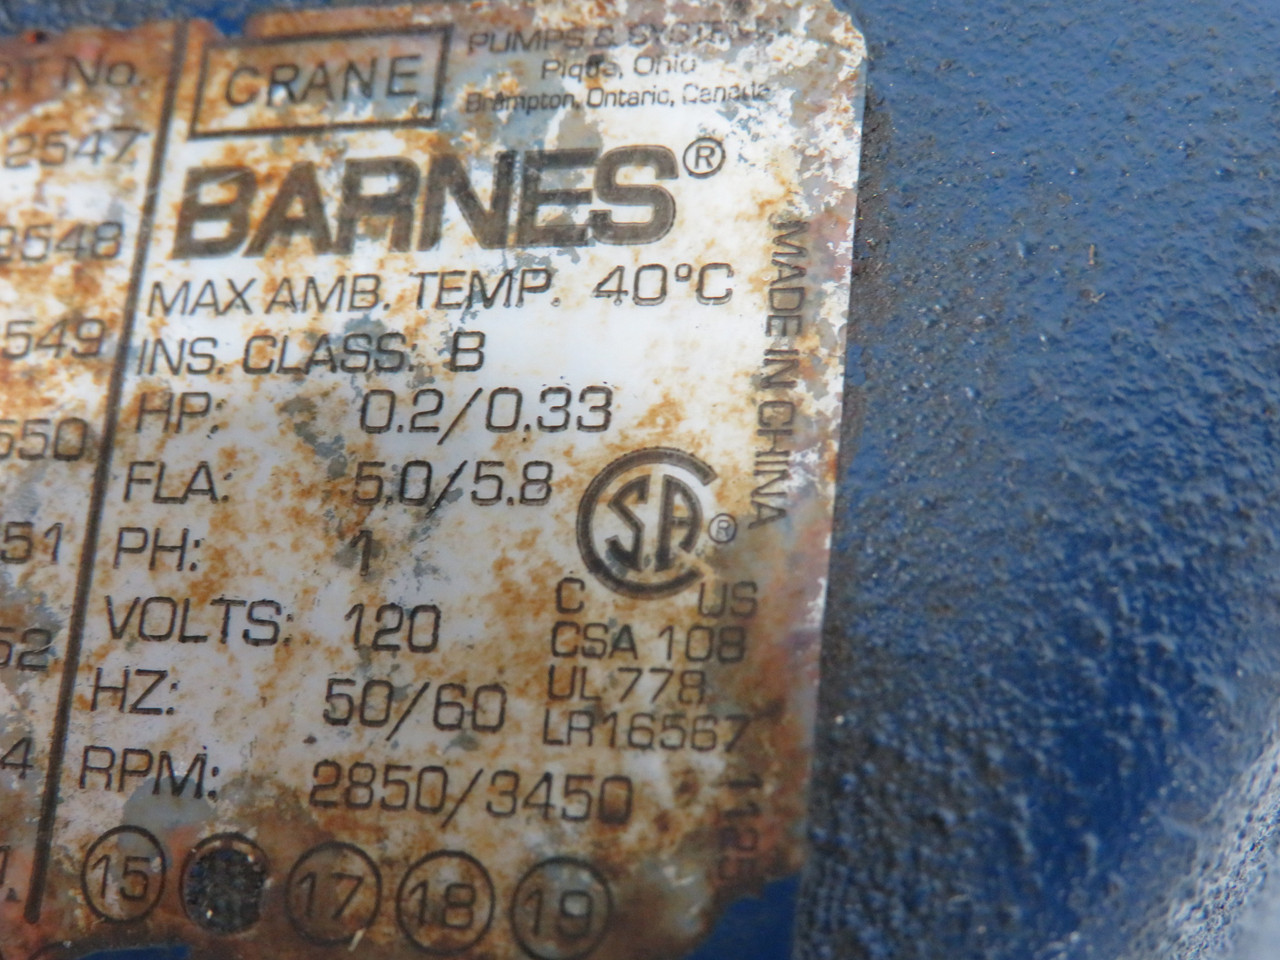 Barnes SP33AX 112550 Submersible Effluent Pump 1-1/2" NPT Outlet DMG USED